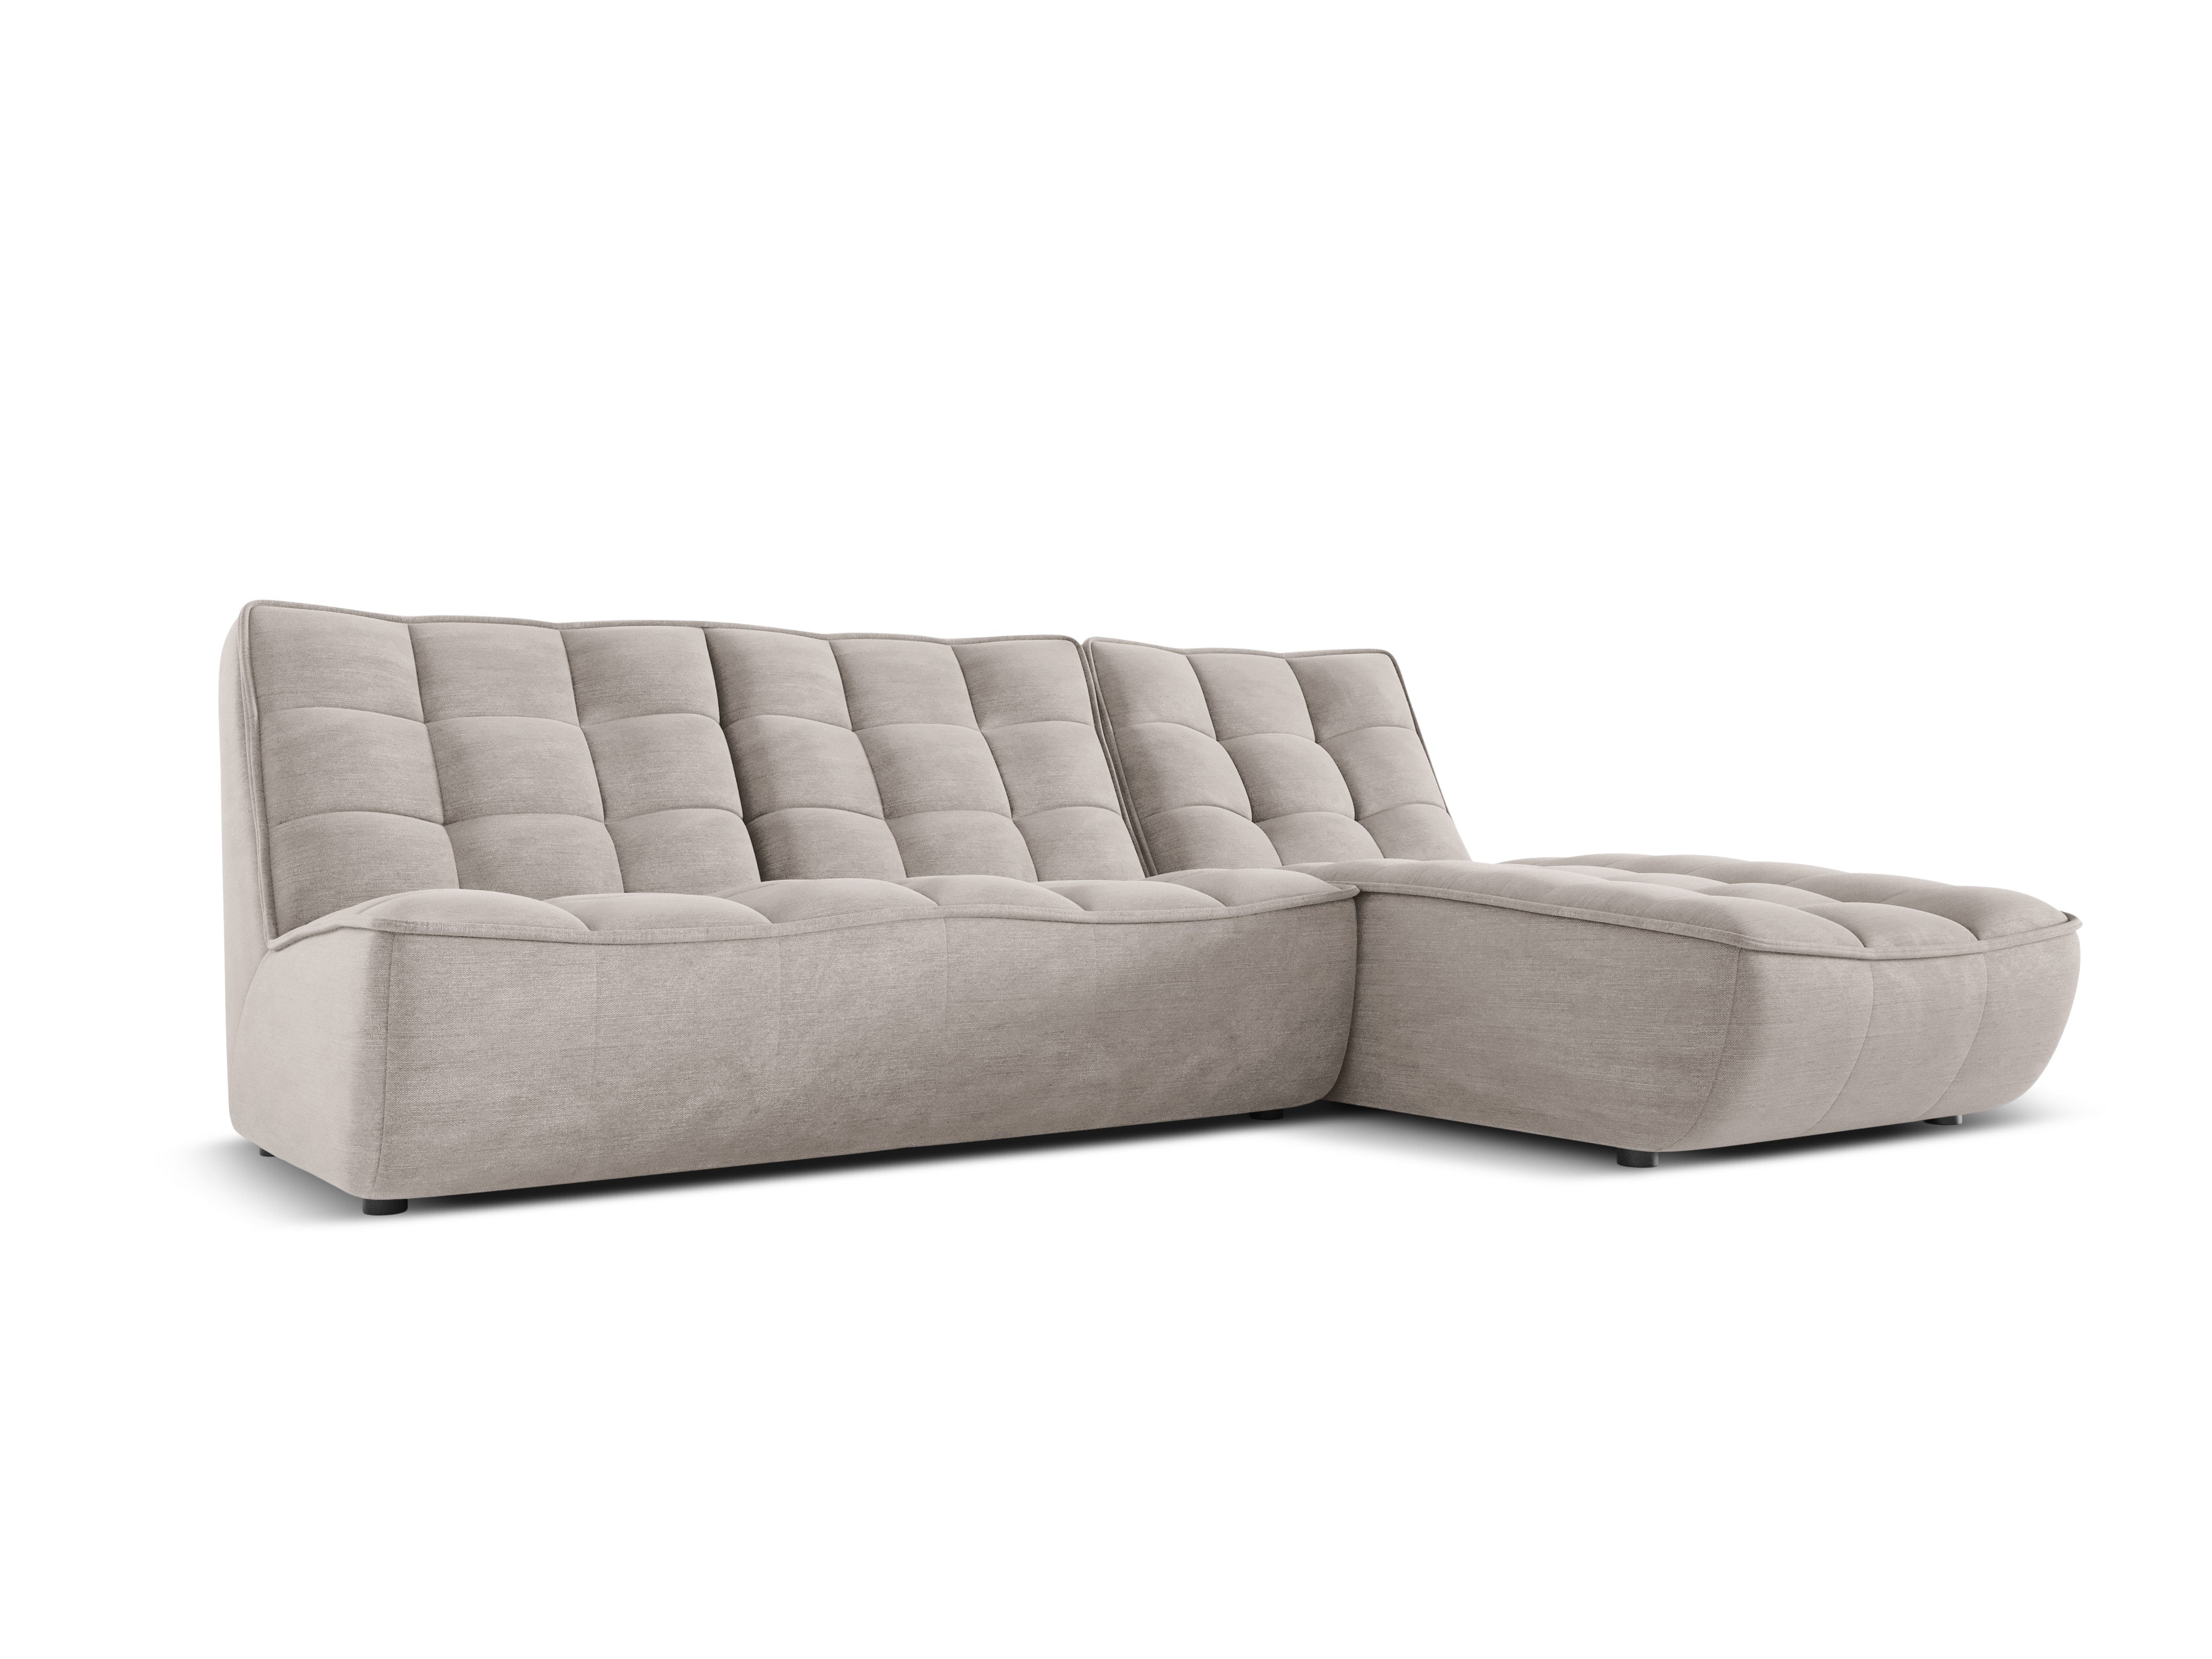 Modular Right Corner Sofa, "Moni", 4 Seats, 246x172x91
Made in Europe, Maison Heritage, Eye on Design